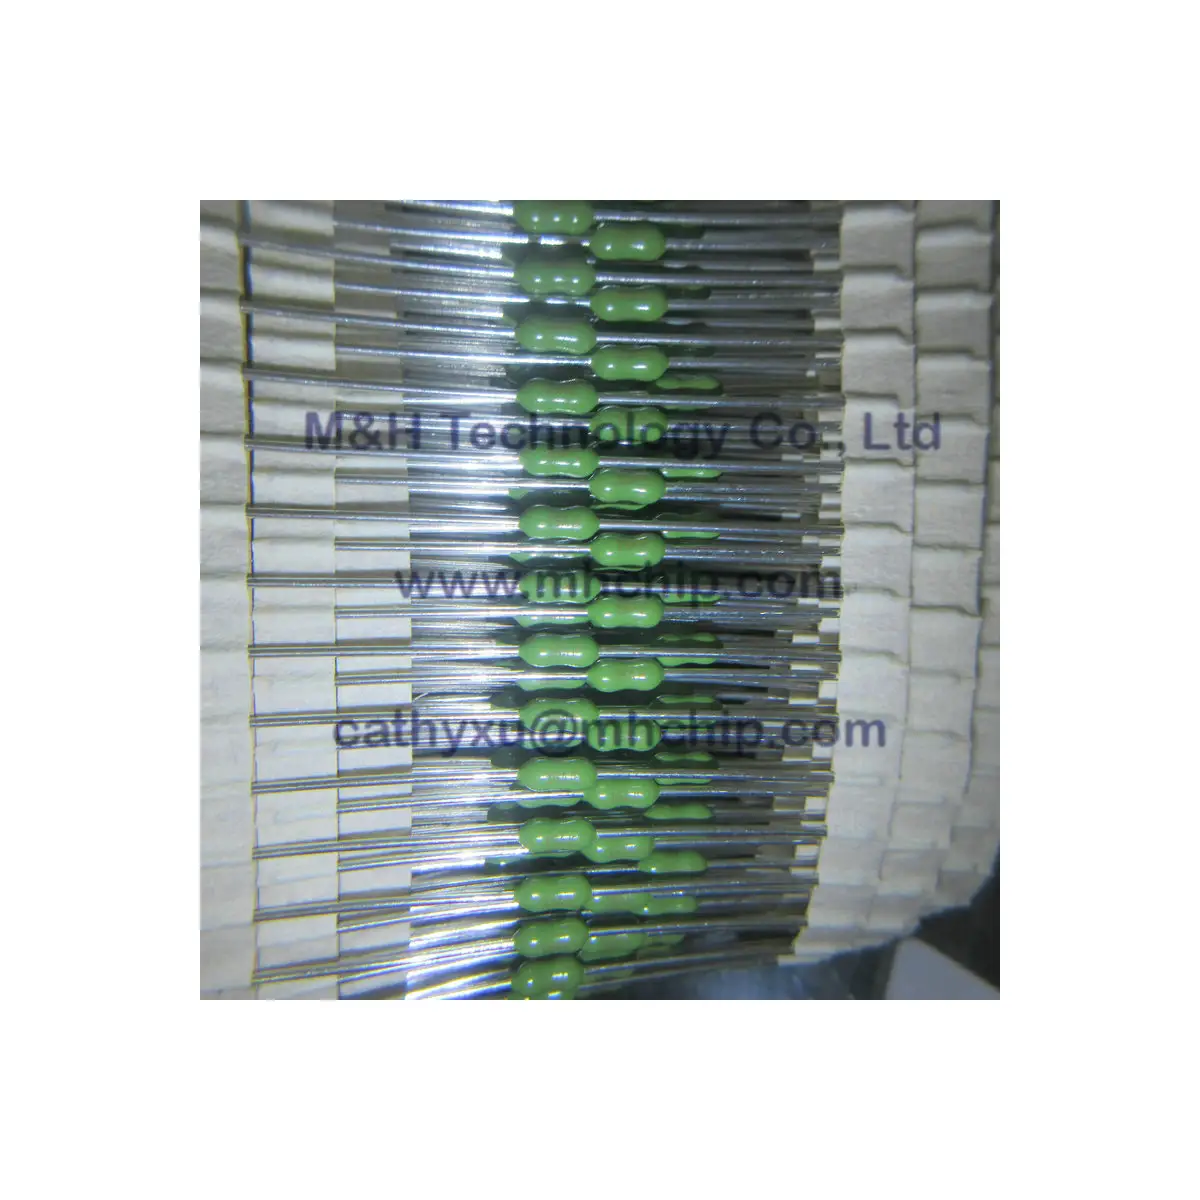 NRT1L-fusibles con orificios 32V 15A, 0251015 unidades